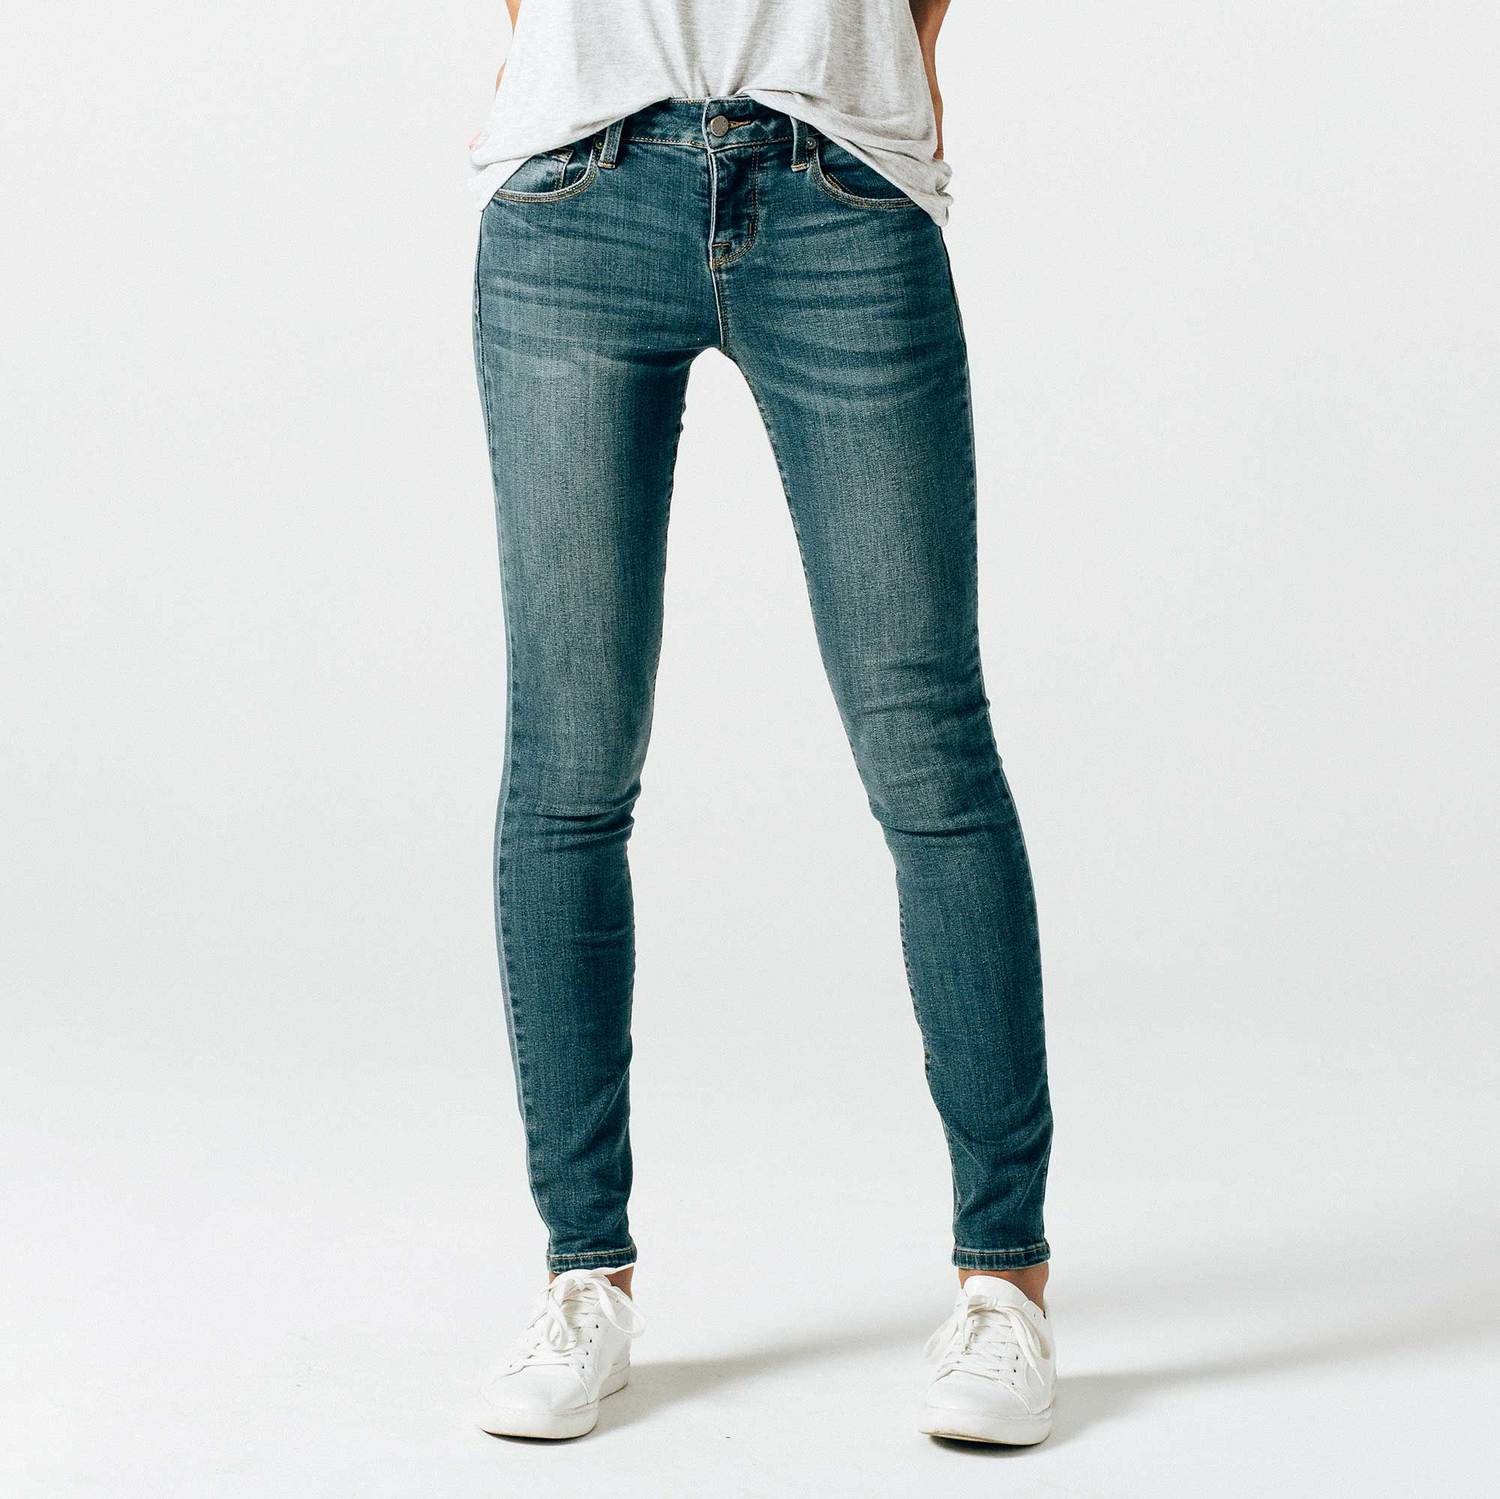 Womens Mid Rise Skinny Jeans In Medium Vintage $95 | DSTLD